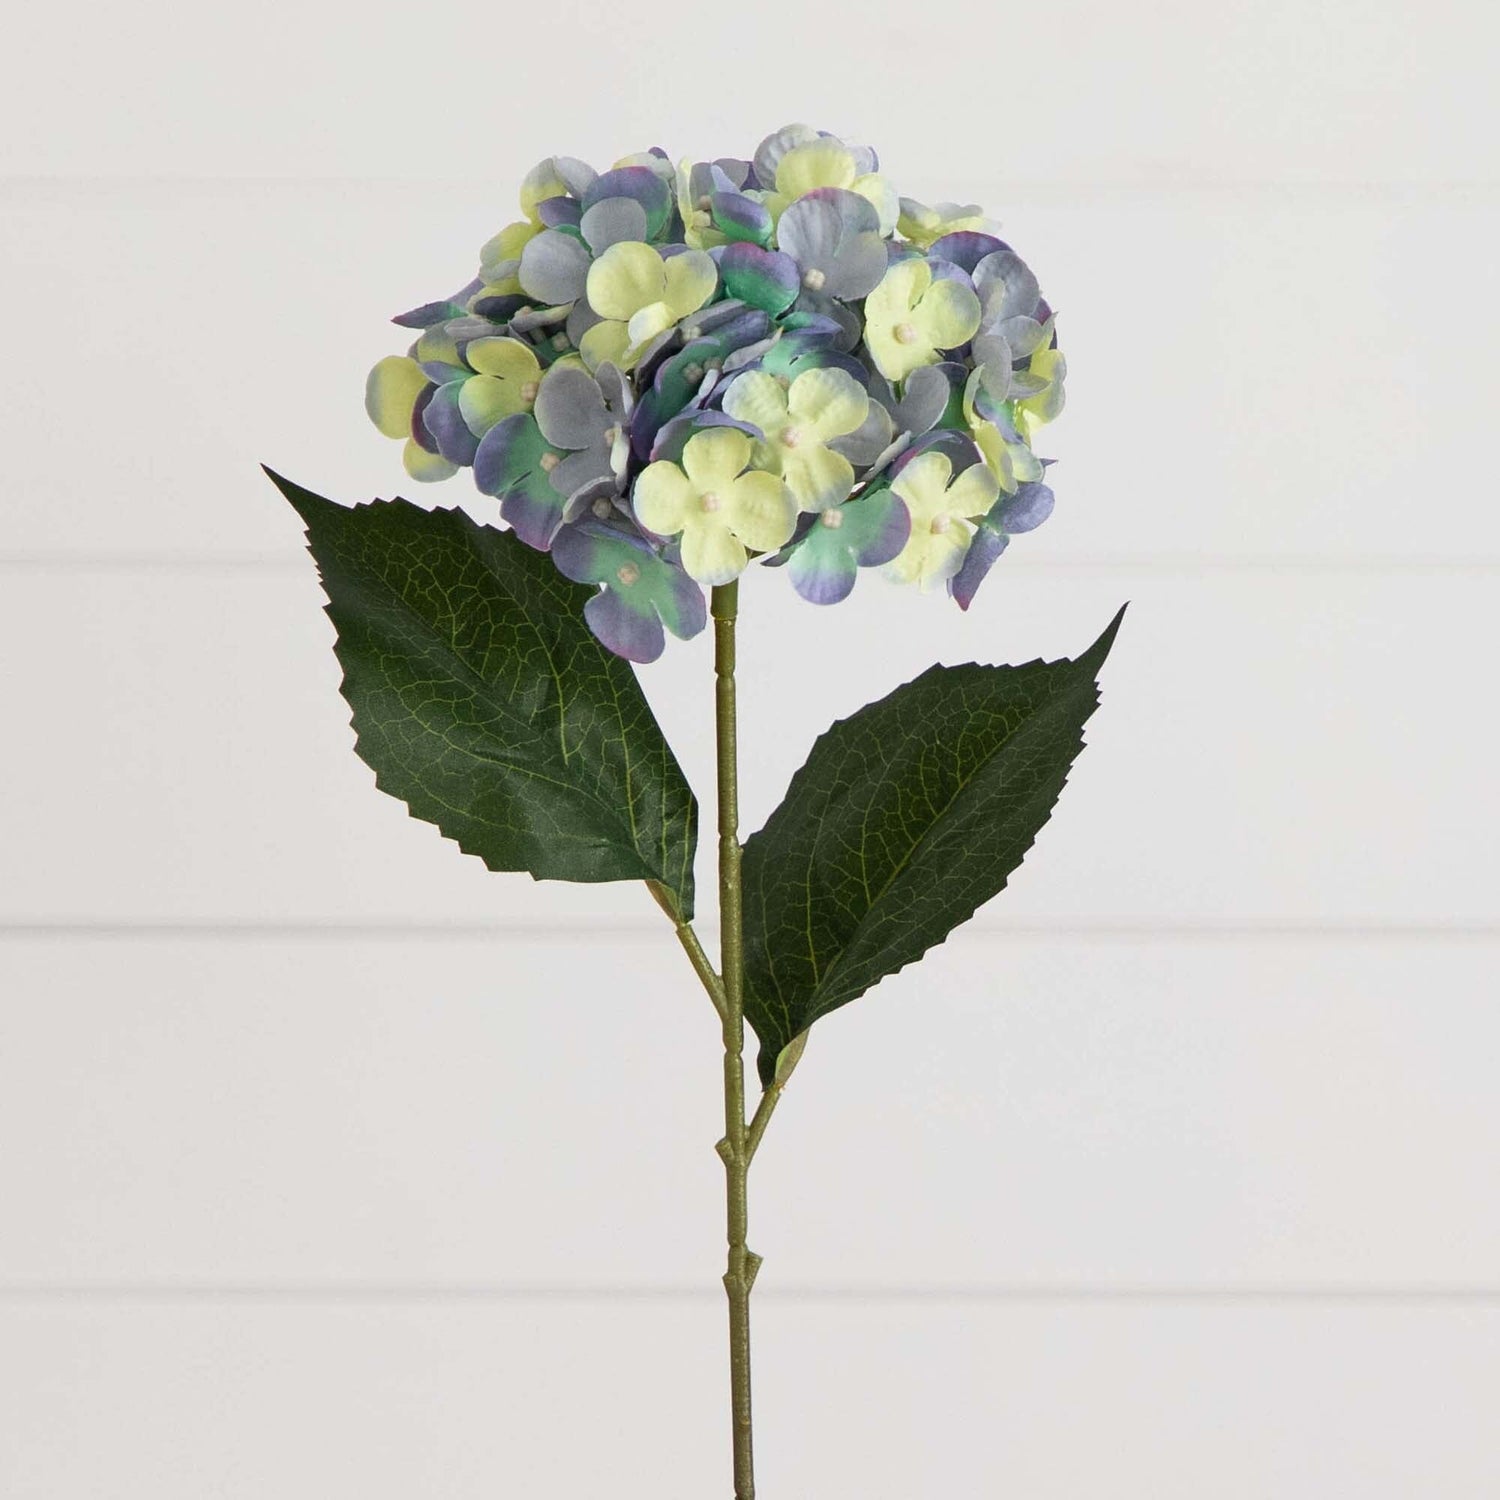 20" Artificial Hydrangea Flower Stems- Set of 3